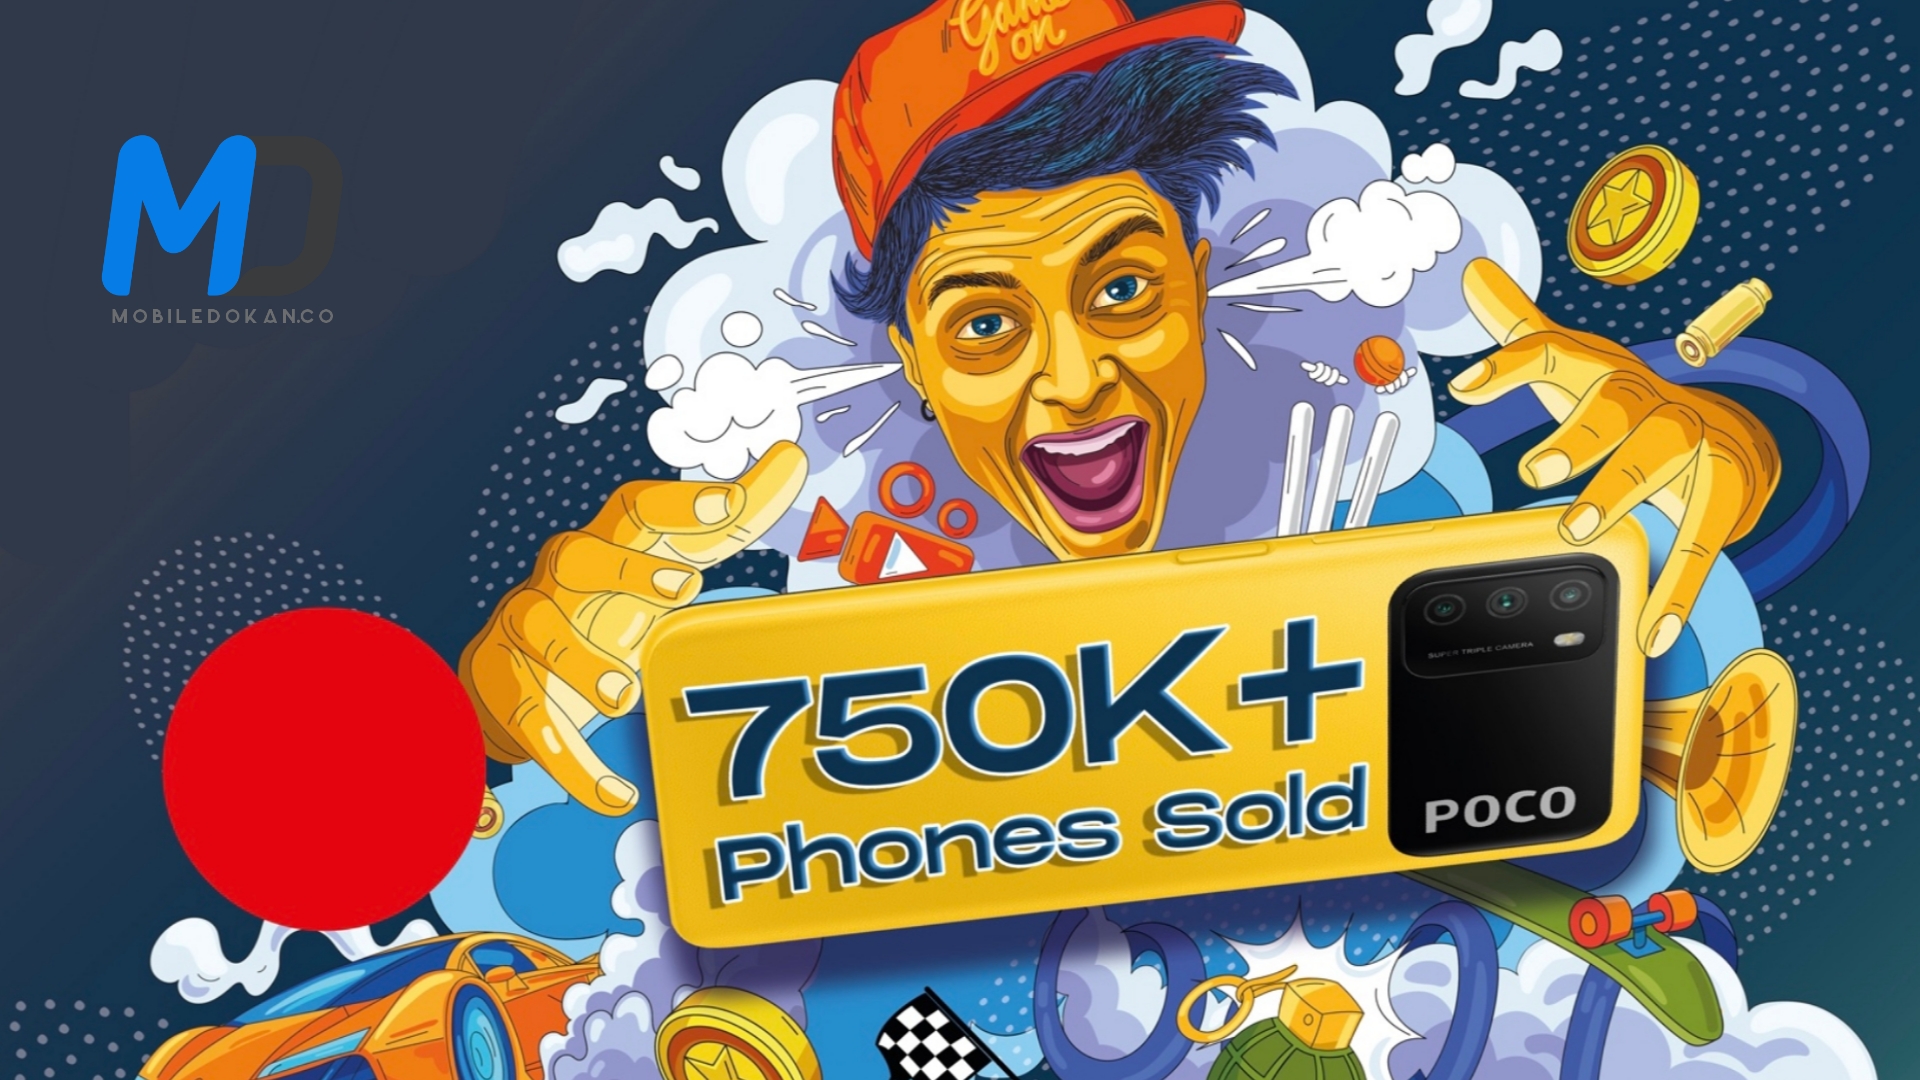 POCO M3 sells across 750K_ units in India